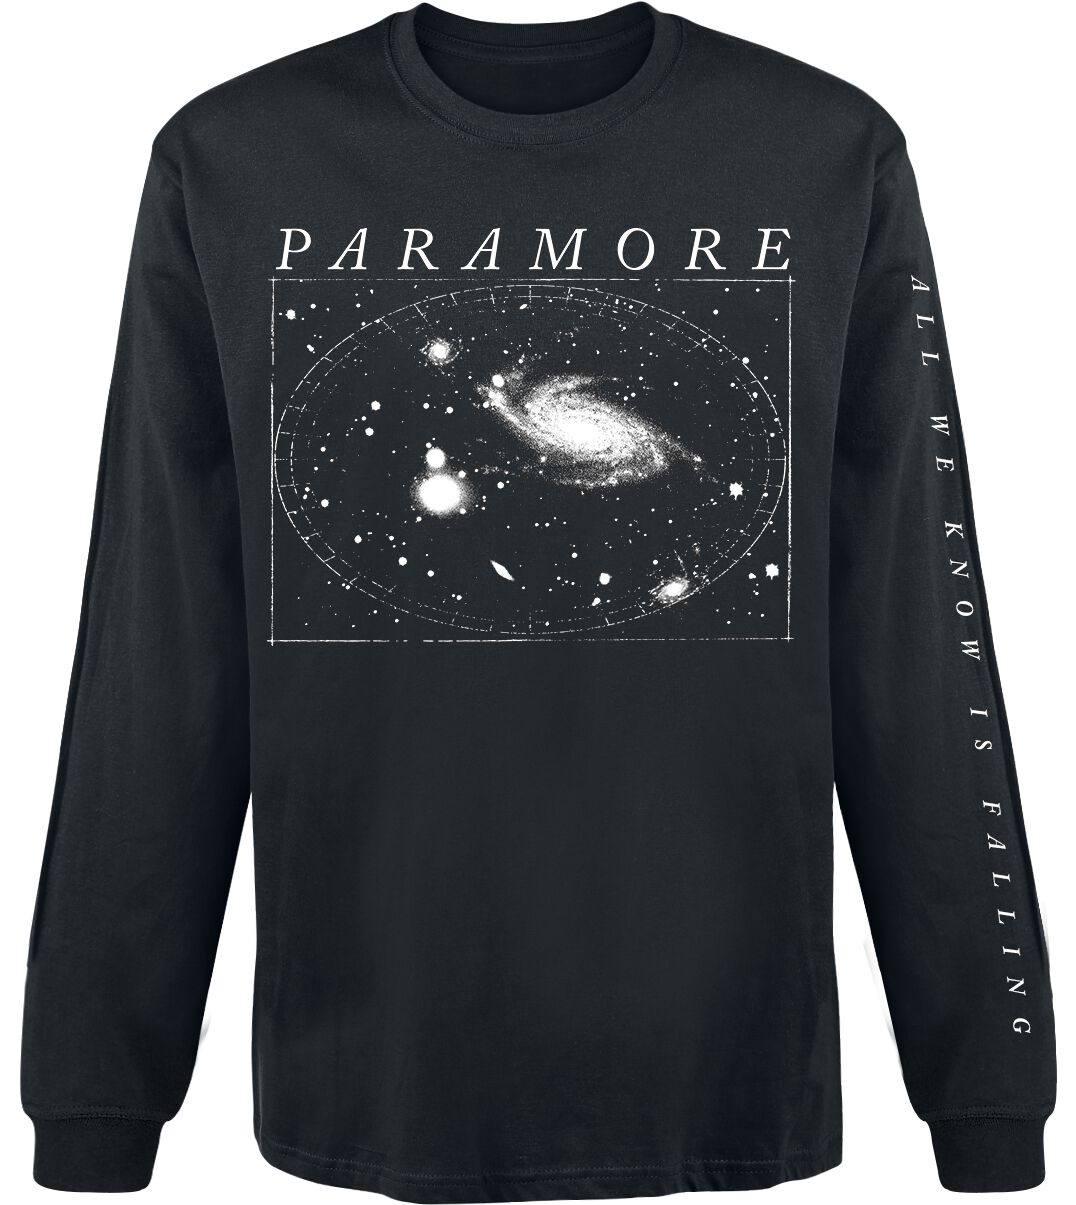 Paramore Tracklist Galaxy Long-sleeve Shirt black